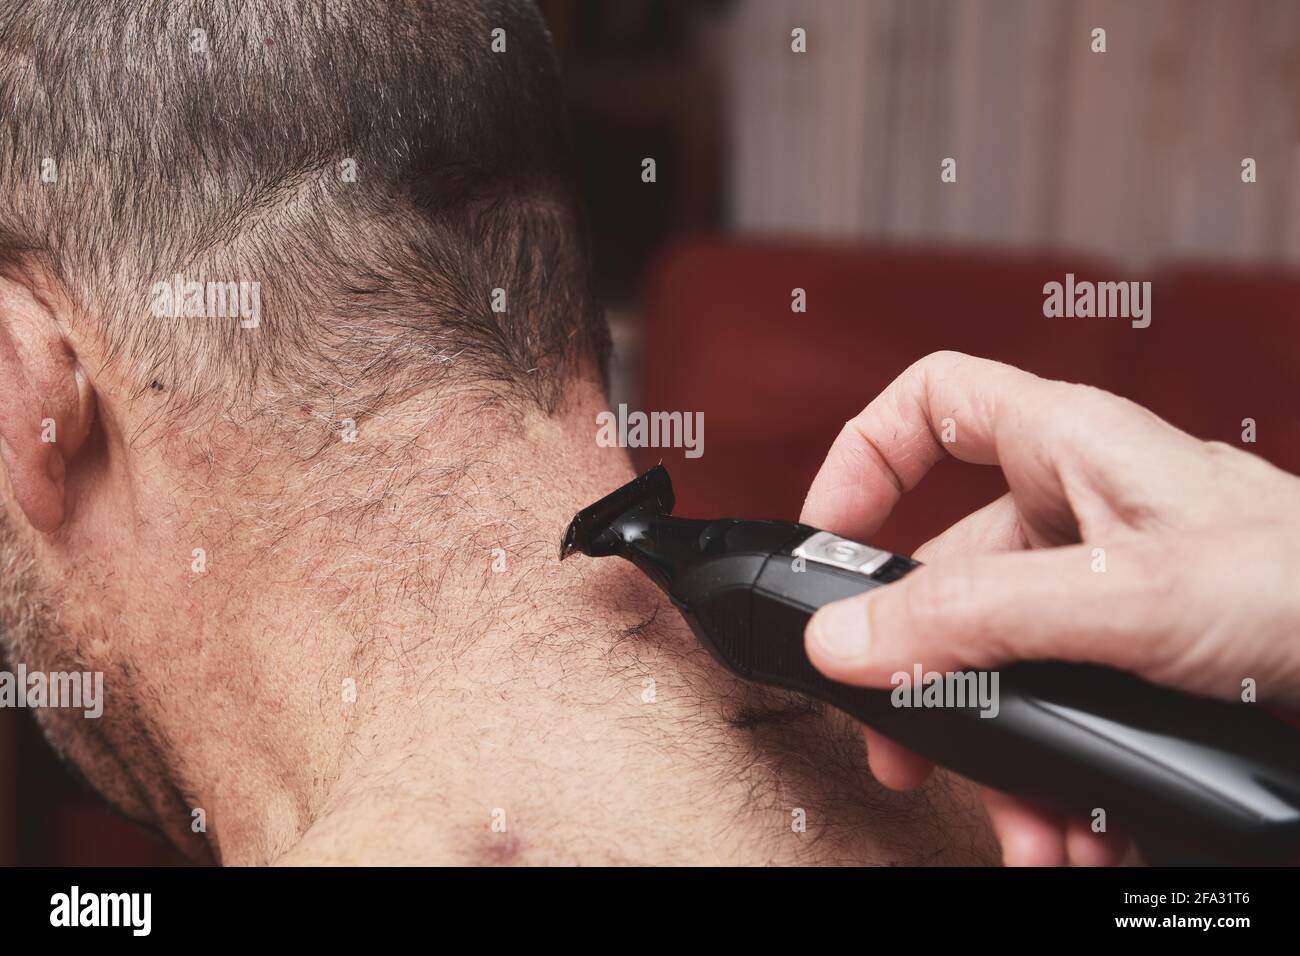 Wife cutting husbands hair at home with a haircut machine or hair clipper. Stock Photo